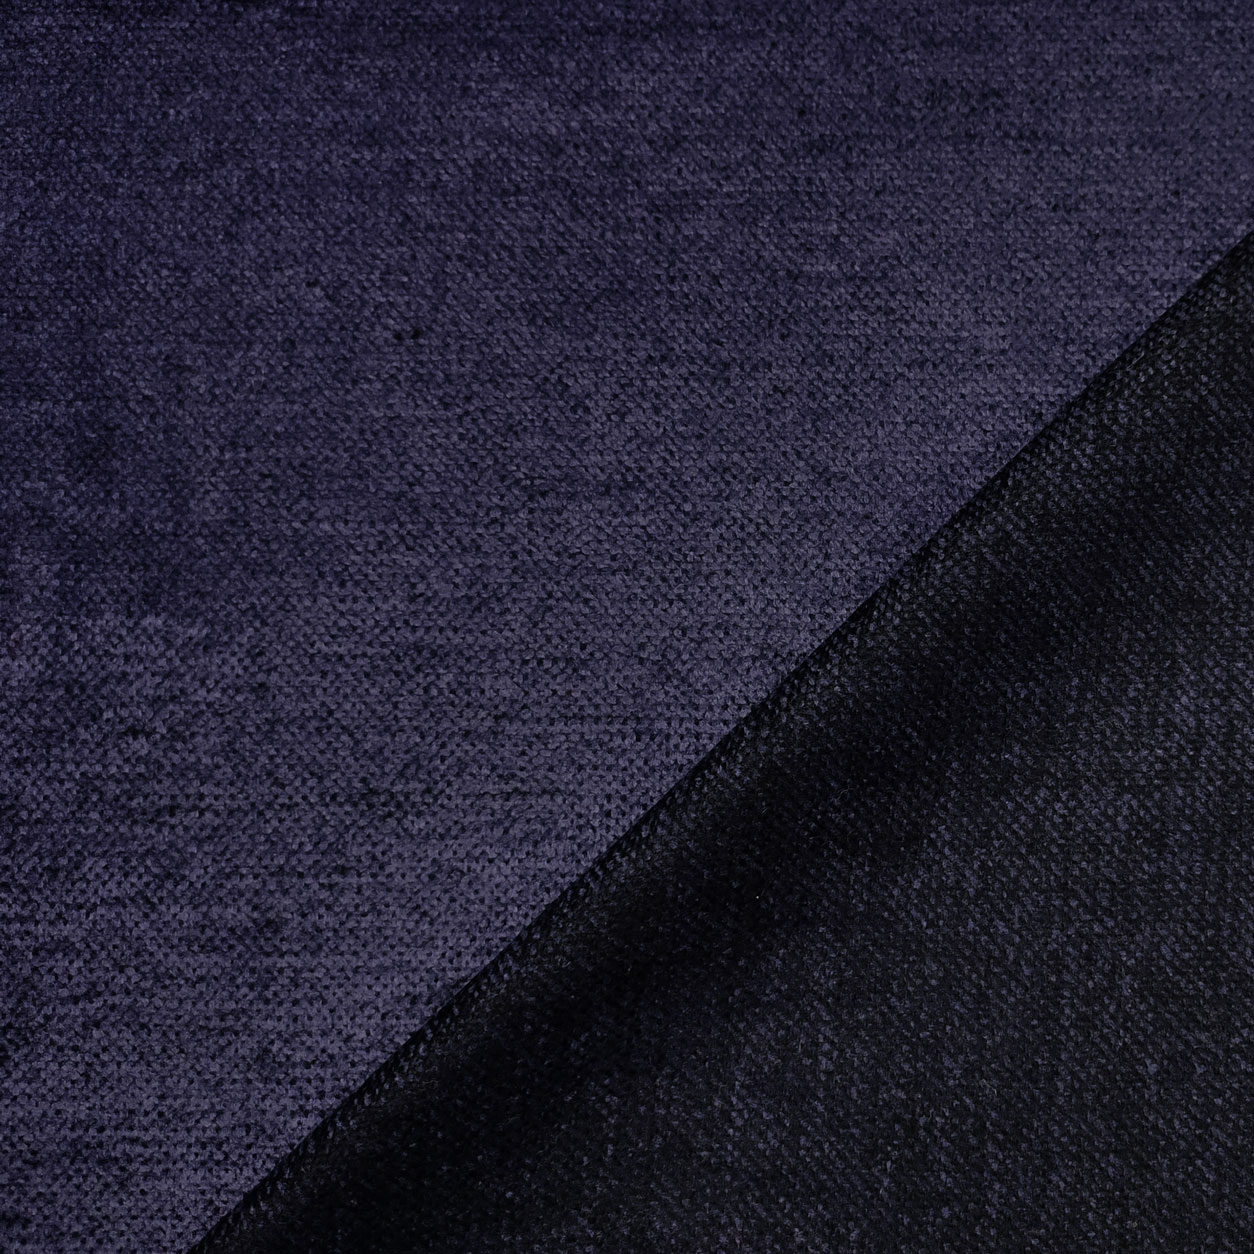 Tessuto misto cotone melange viola e nero